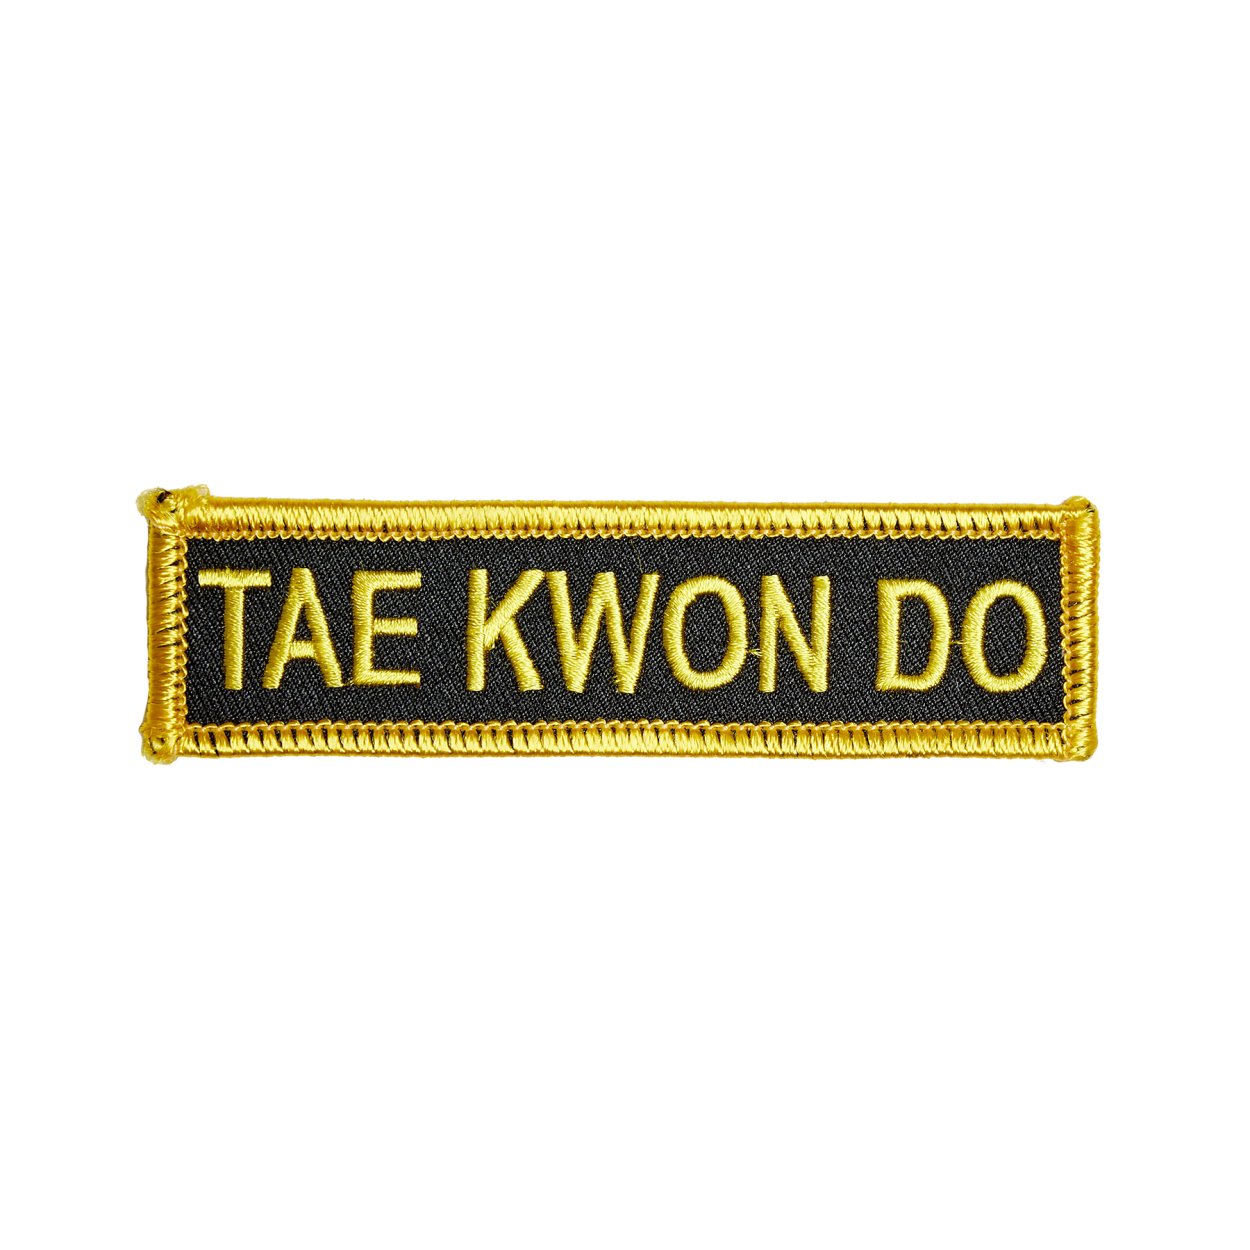 Taekwondo Patch - Click Image to Close